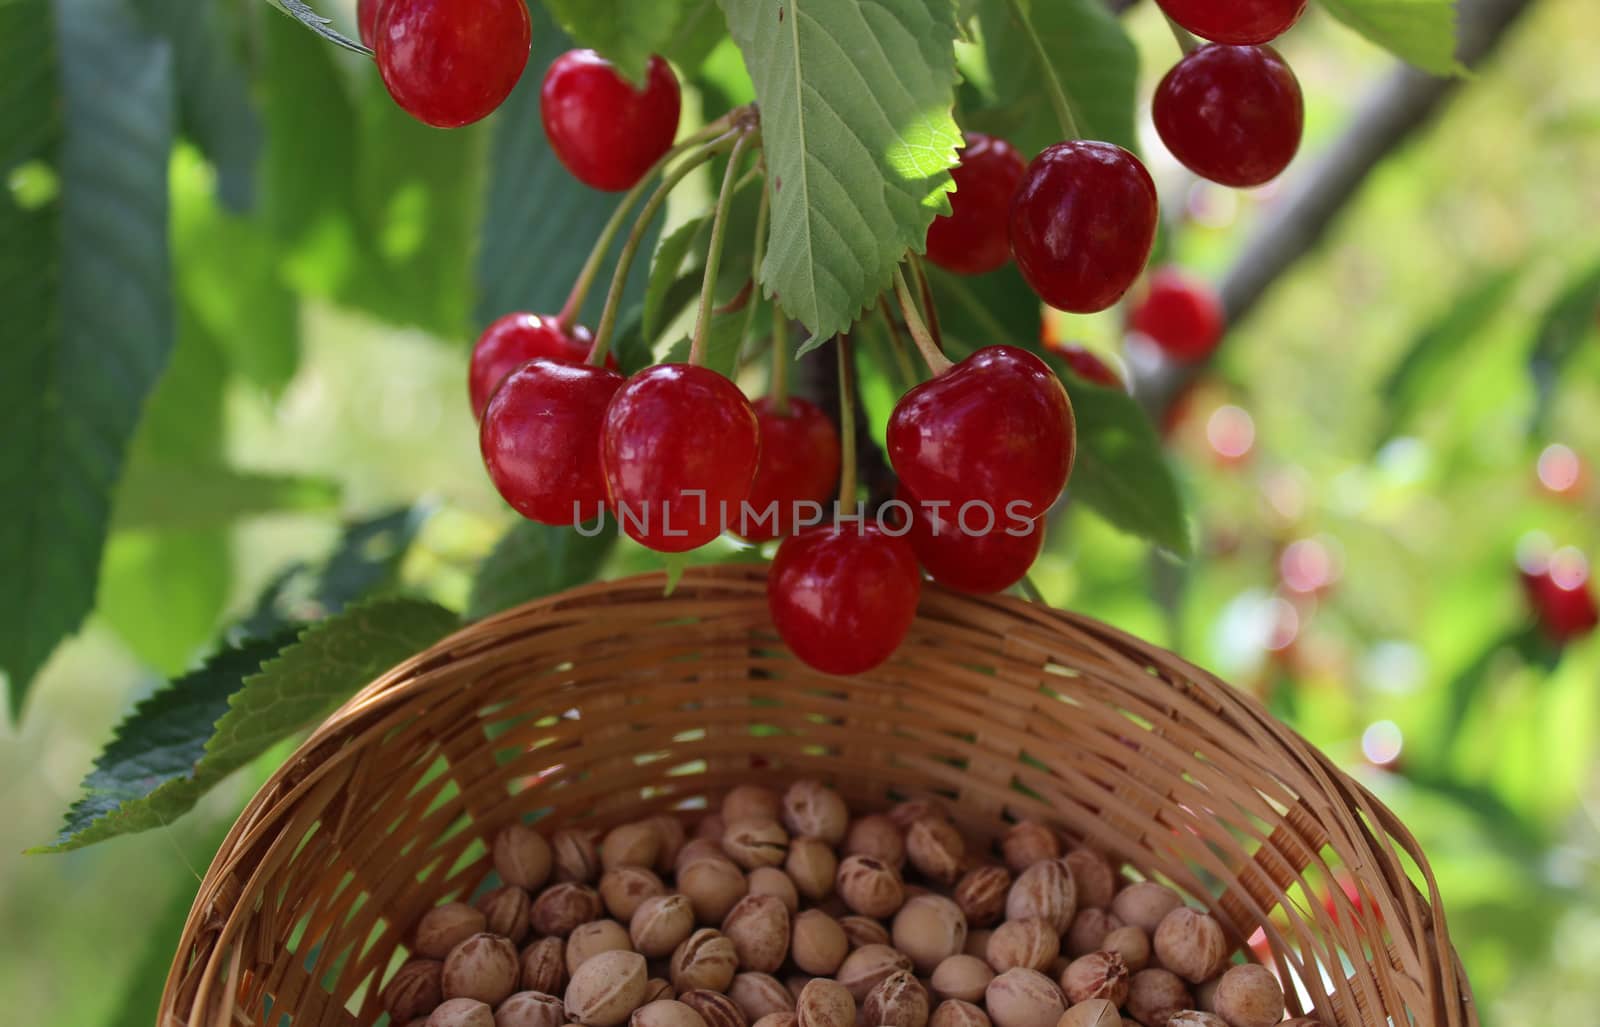 many cherry stones and cherries by martina_unbehauen